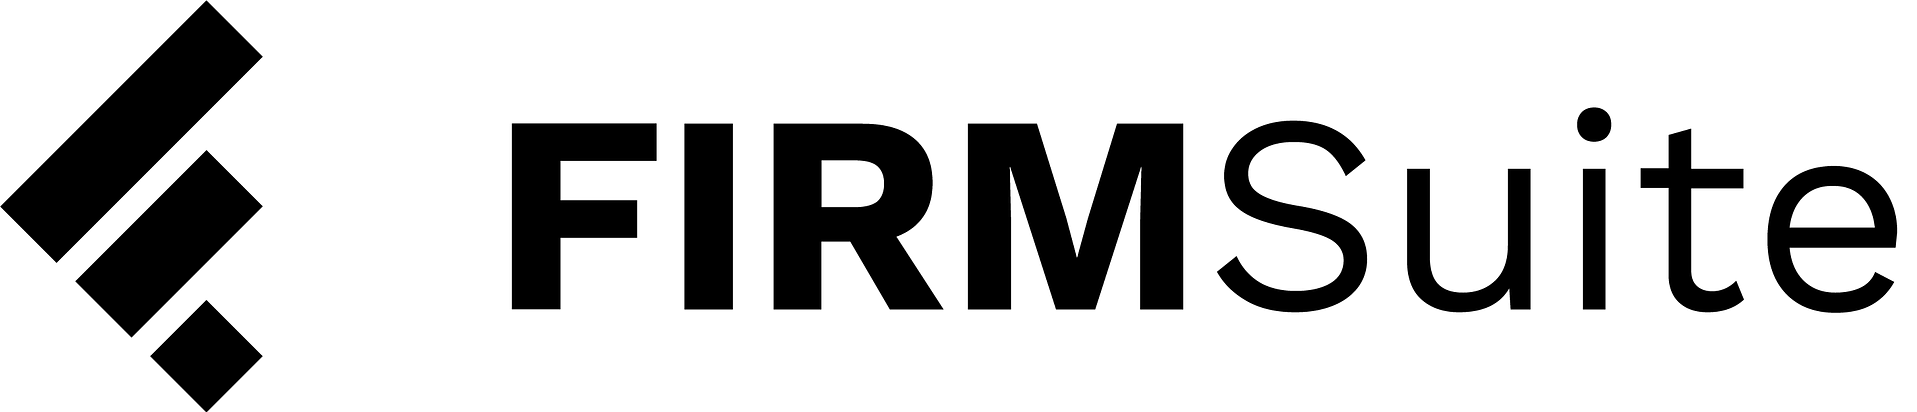 Multitel's FIRMSuite logo